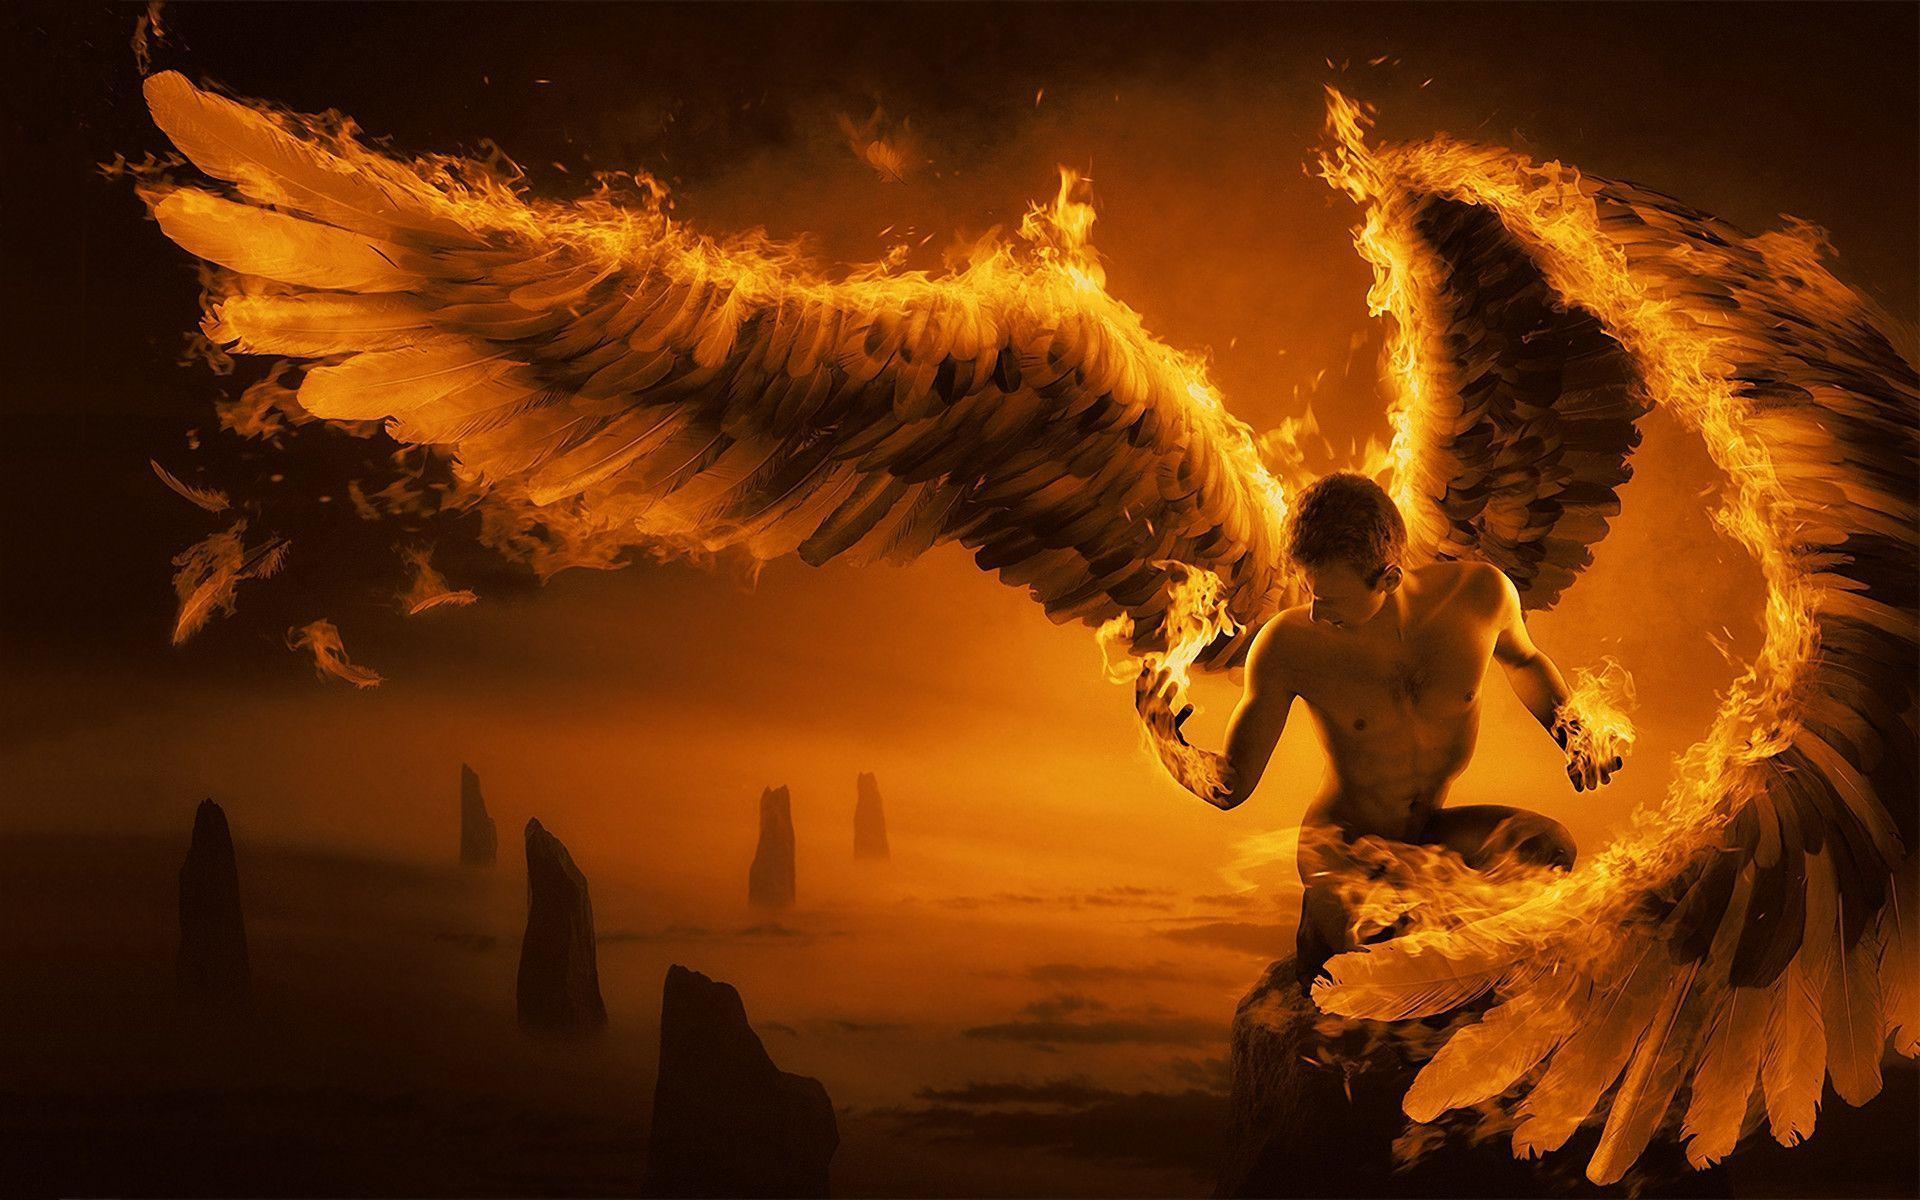 Download Fire Angel Man For Desktop Wallpaper Free By Warnerboutique